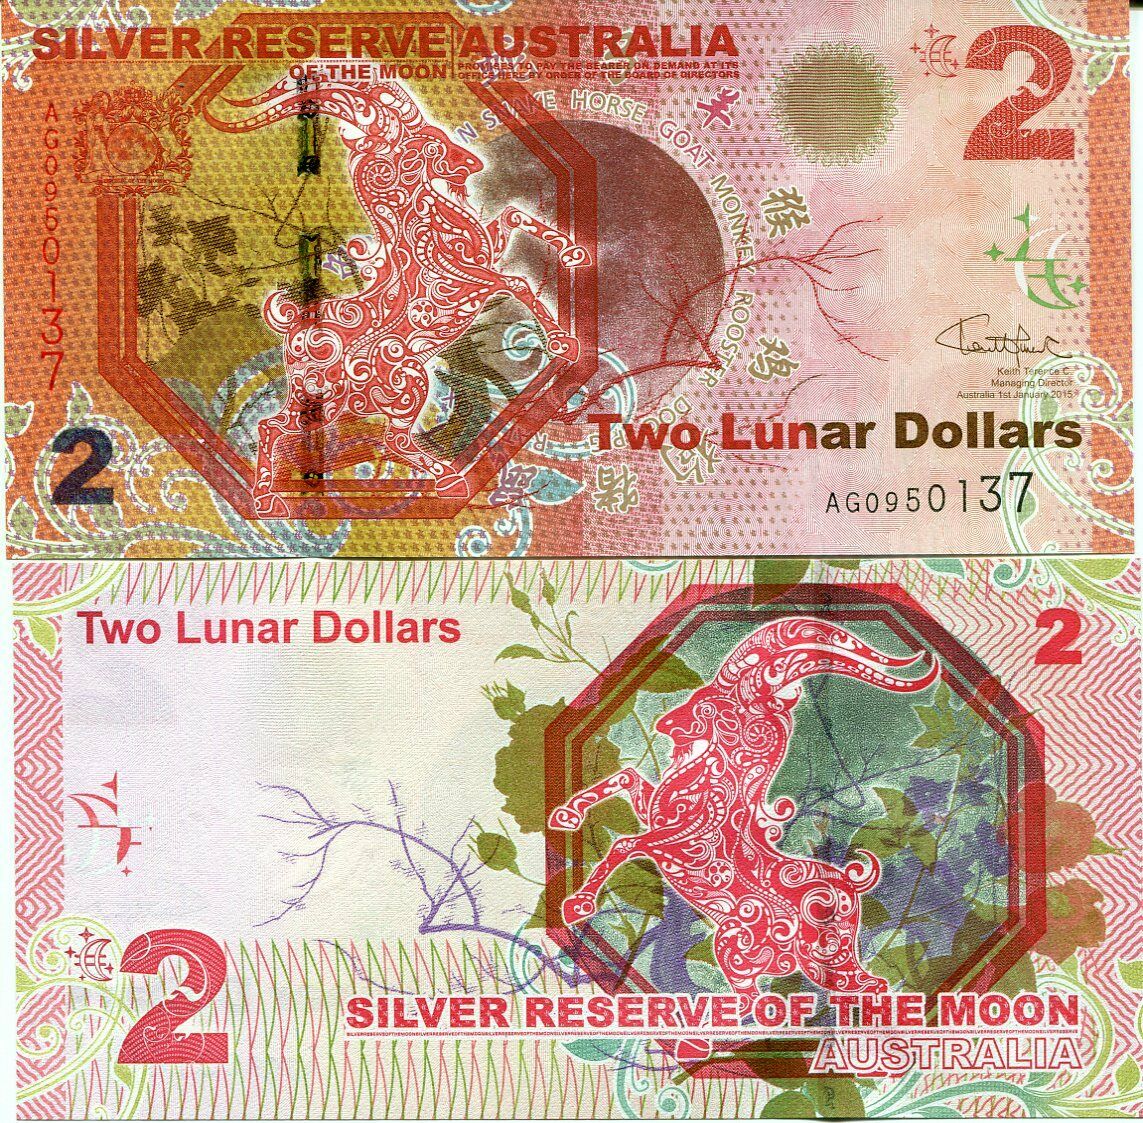 Silver Reserve Australia 2 Lunar Dollars 2015 Goat UNC